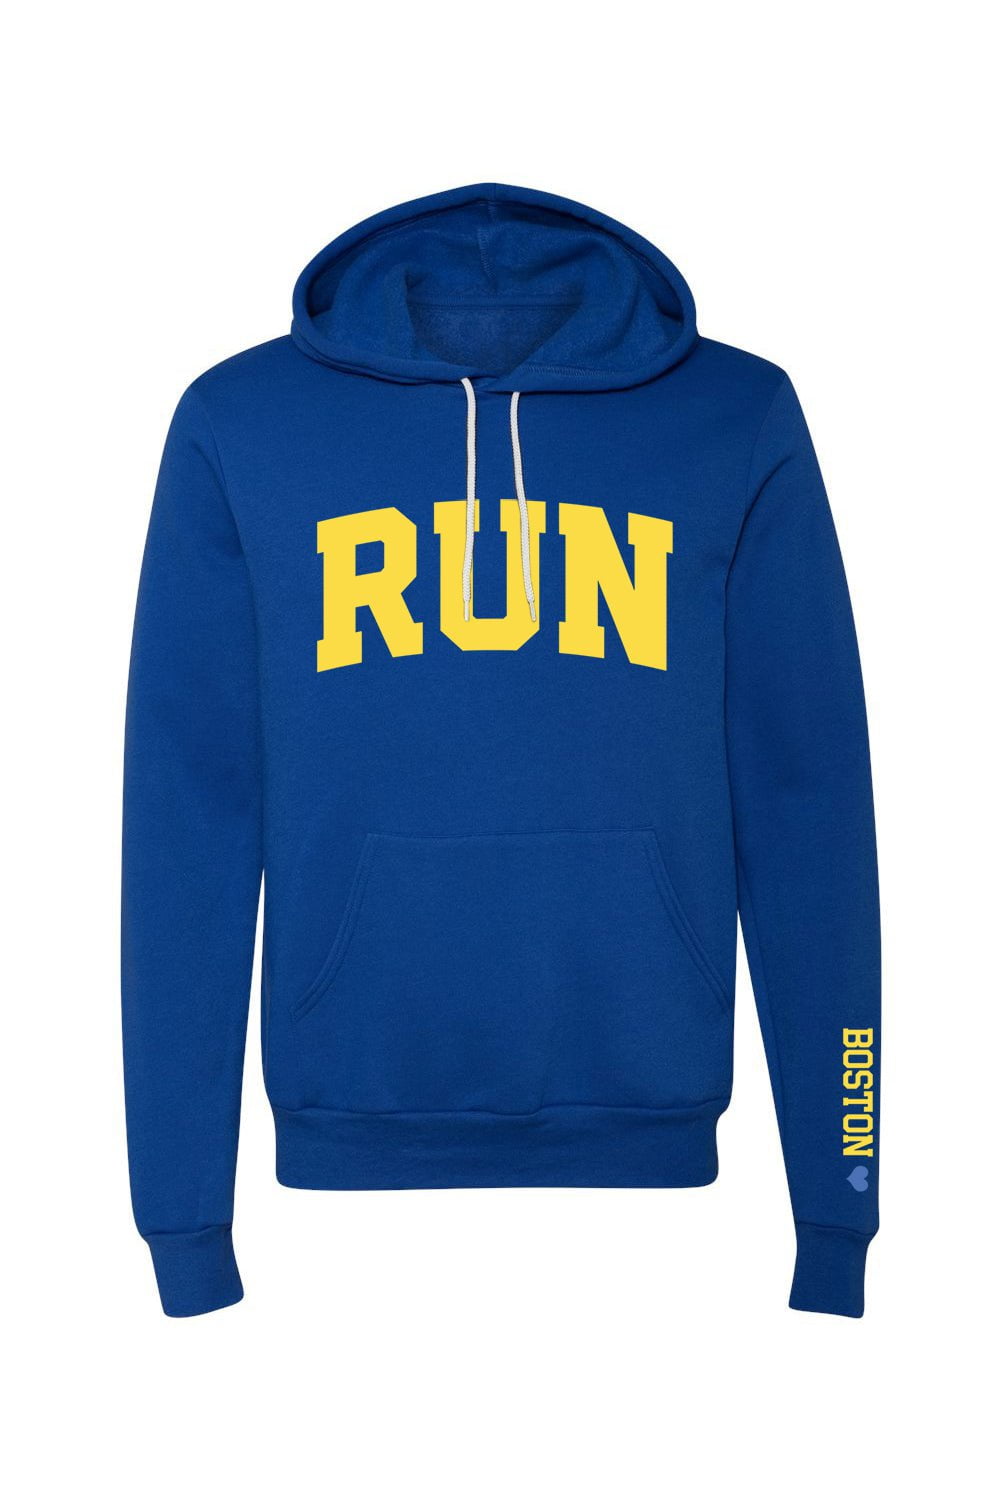 Sarah Marie Design Studio Sweatshirt XSmall / Royal Blue Run Boston Hoodie